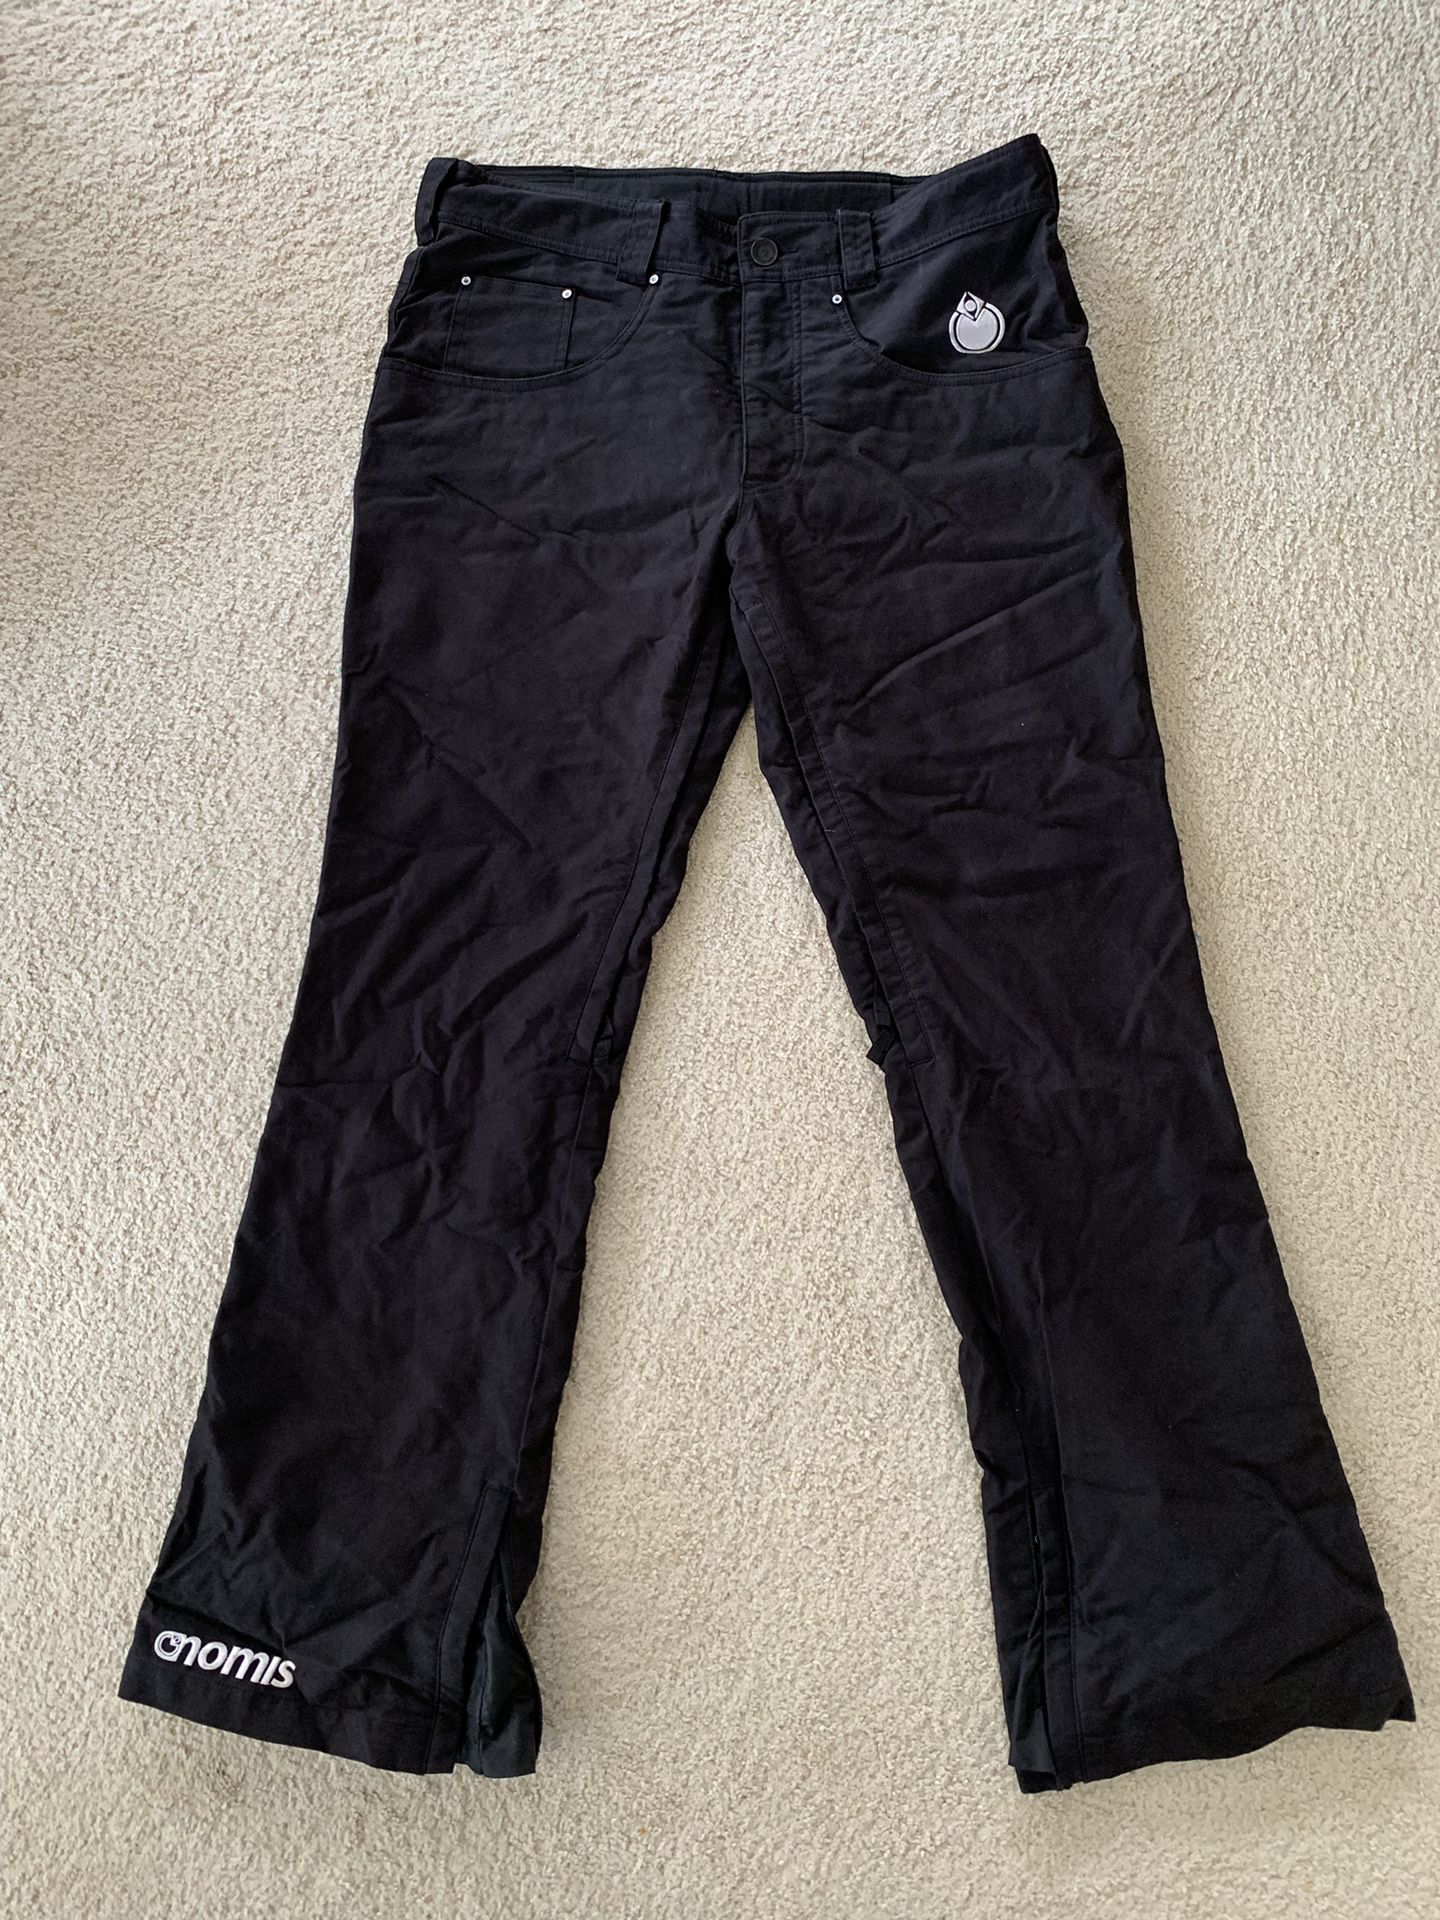 Nomis Snowboard Pants waist 35-36.5 New